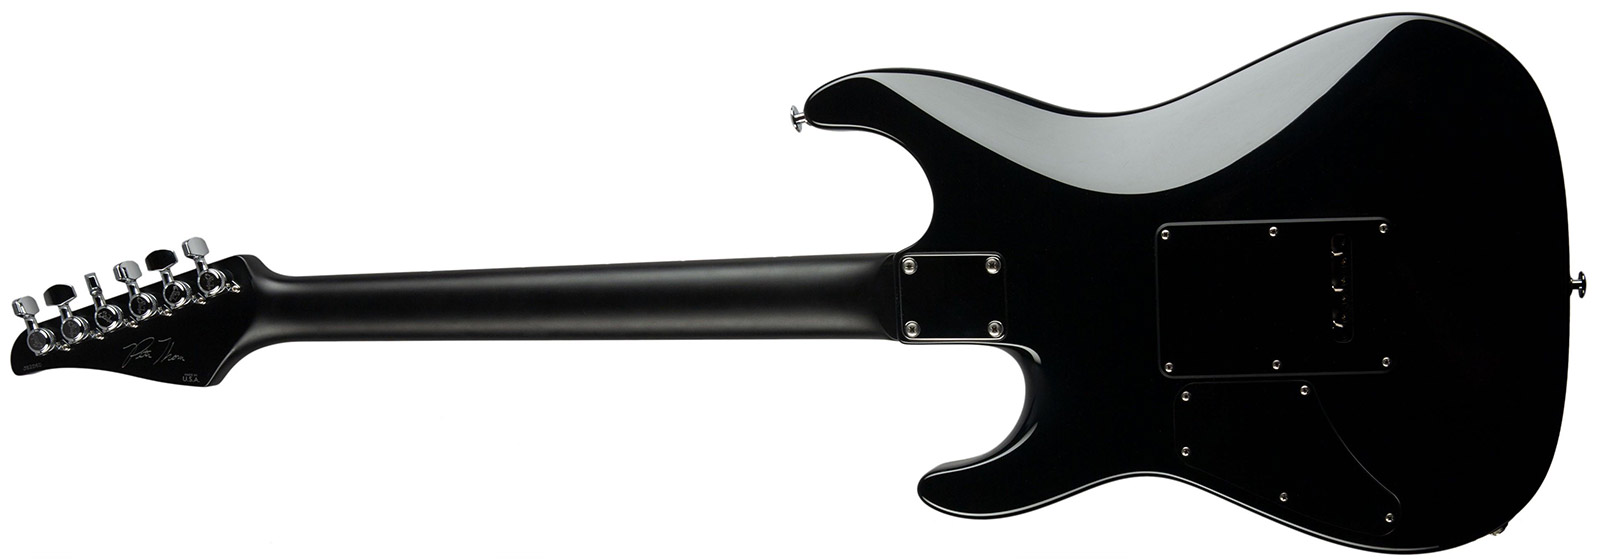 Suhr Pete Thorn Standard 01-sig-0029 Signature 2h Trem Rw - Garnet Red - Guitare Électrique Forme Str - Variation 1